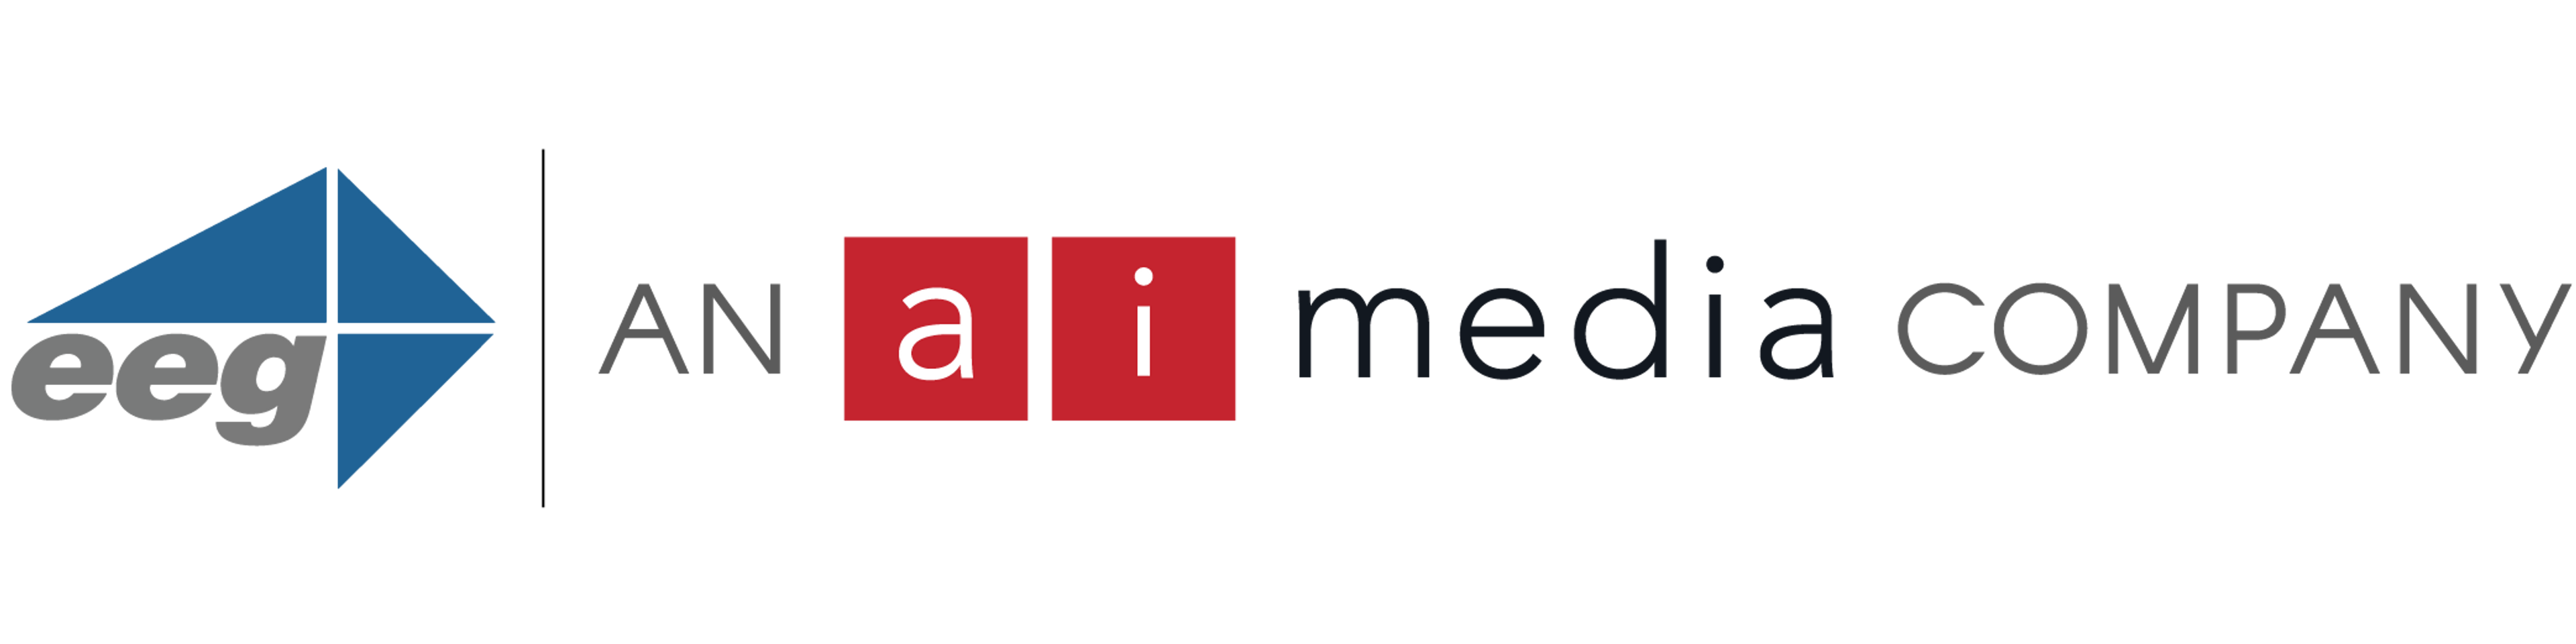 EEG, an Ai-Media company logo